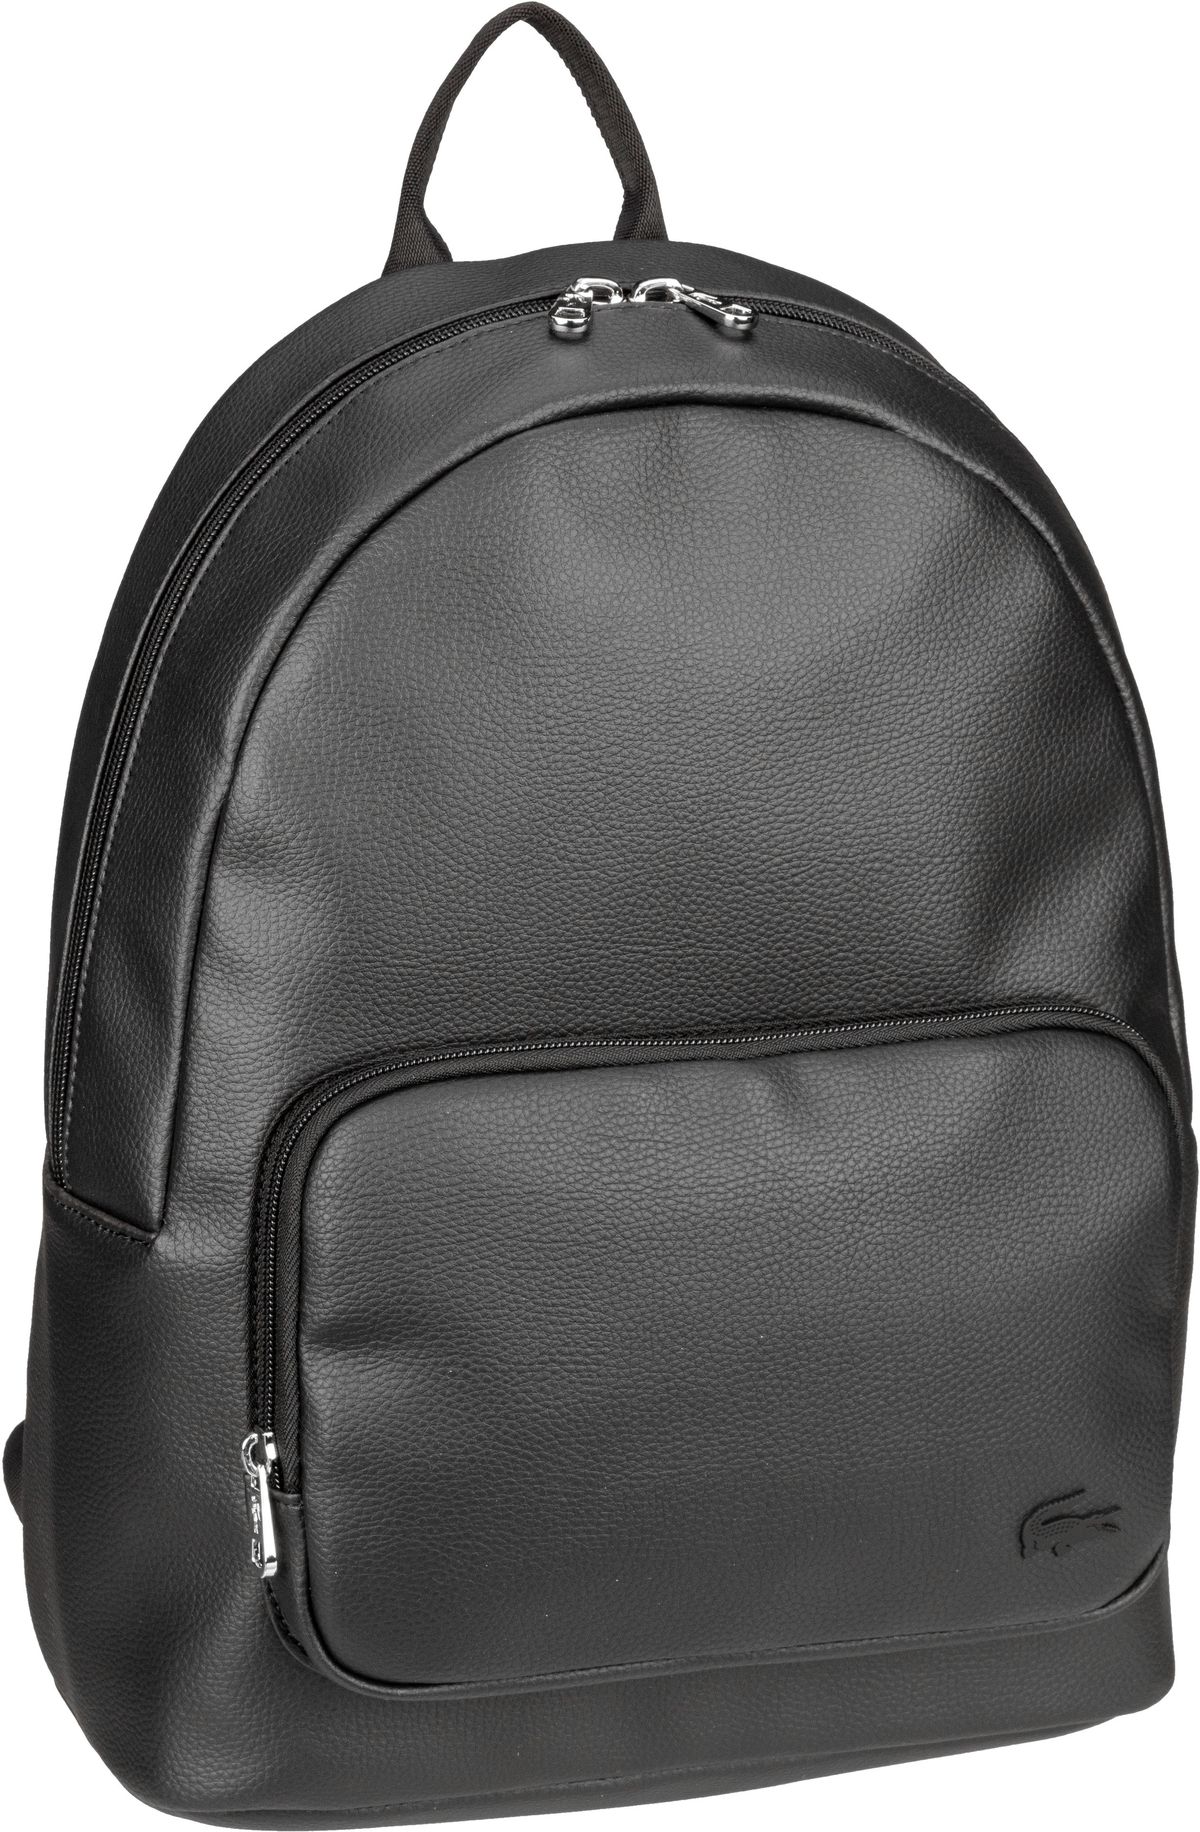 Lacoste Gael Backpack 4314 - Black